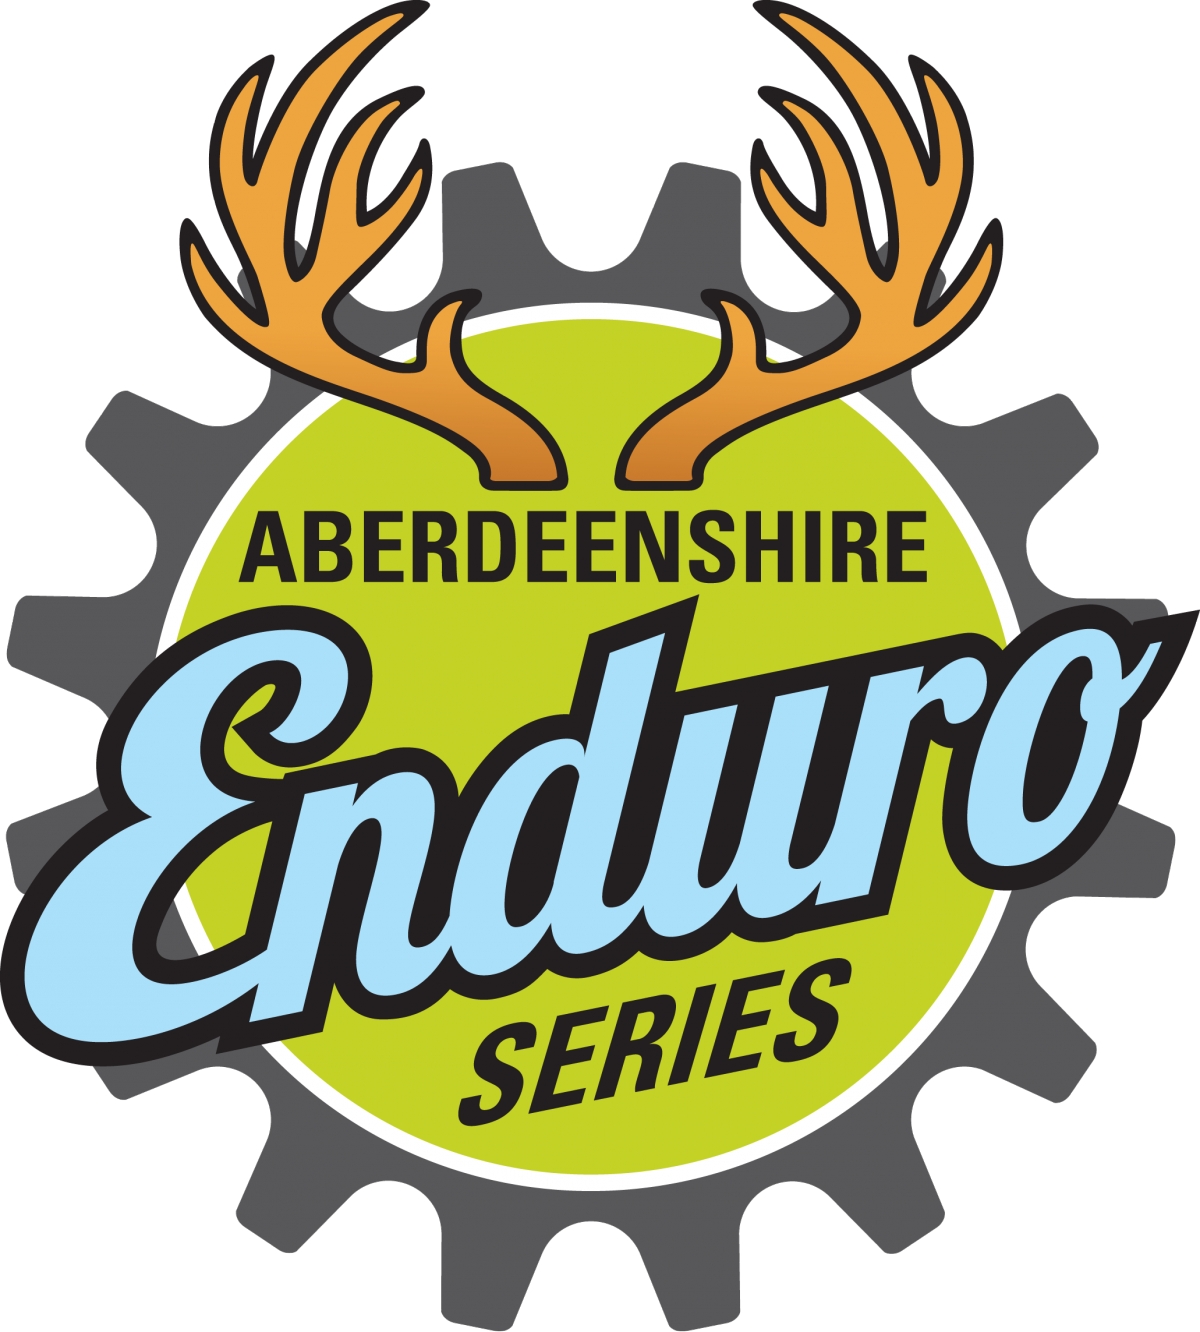 Aboyne Enduro - Aberdeenshire Enduro Series 2019